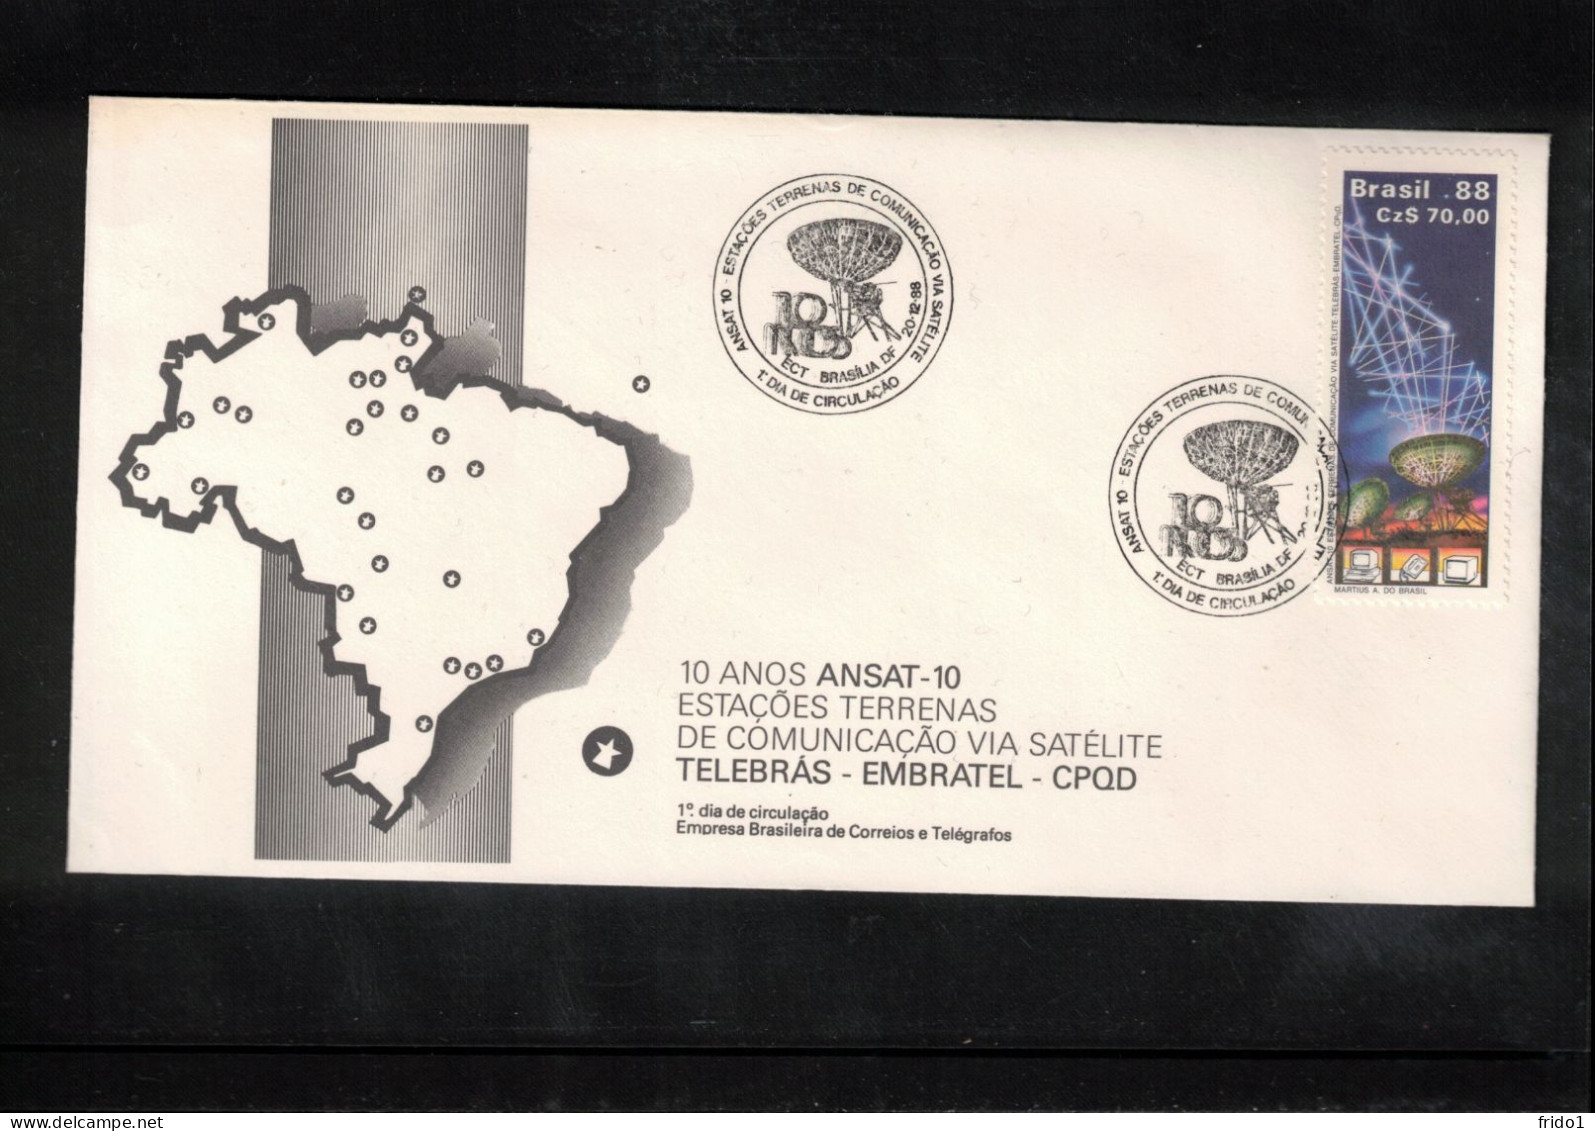 Brasil 1988 Space / Weltraum 10th Anniversary Of ANSAT-10 Satellite Communications Interesting Cover FDC - Südamerika